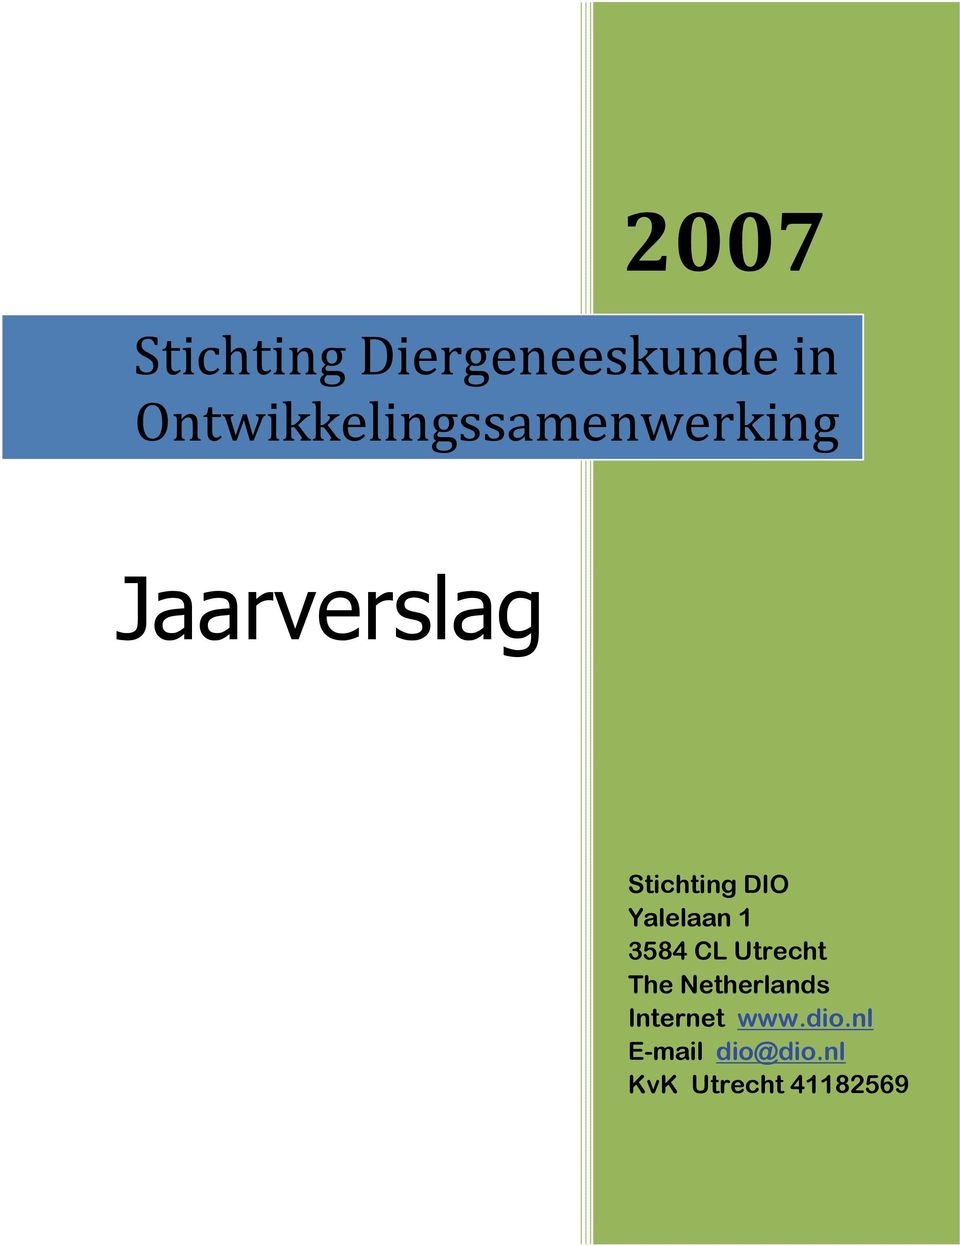 Stichting DIO Yalelaan 1 3584 CL Utrecht The